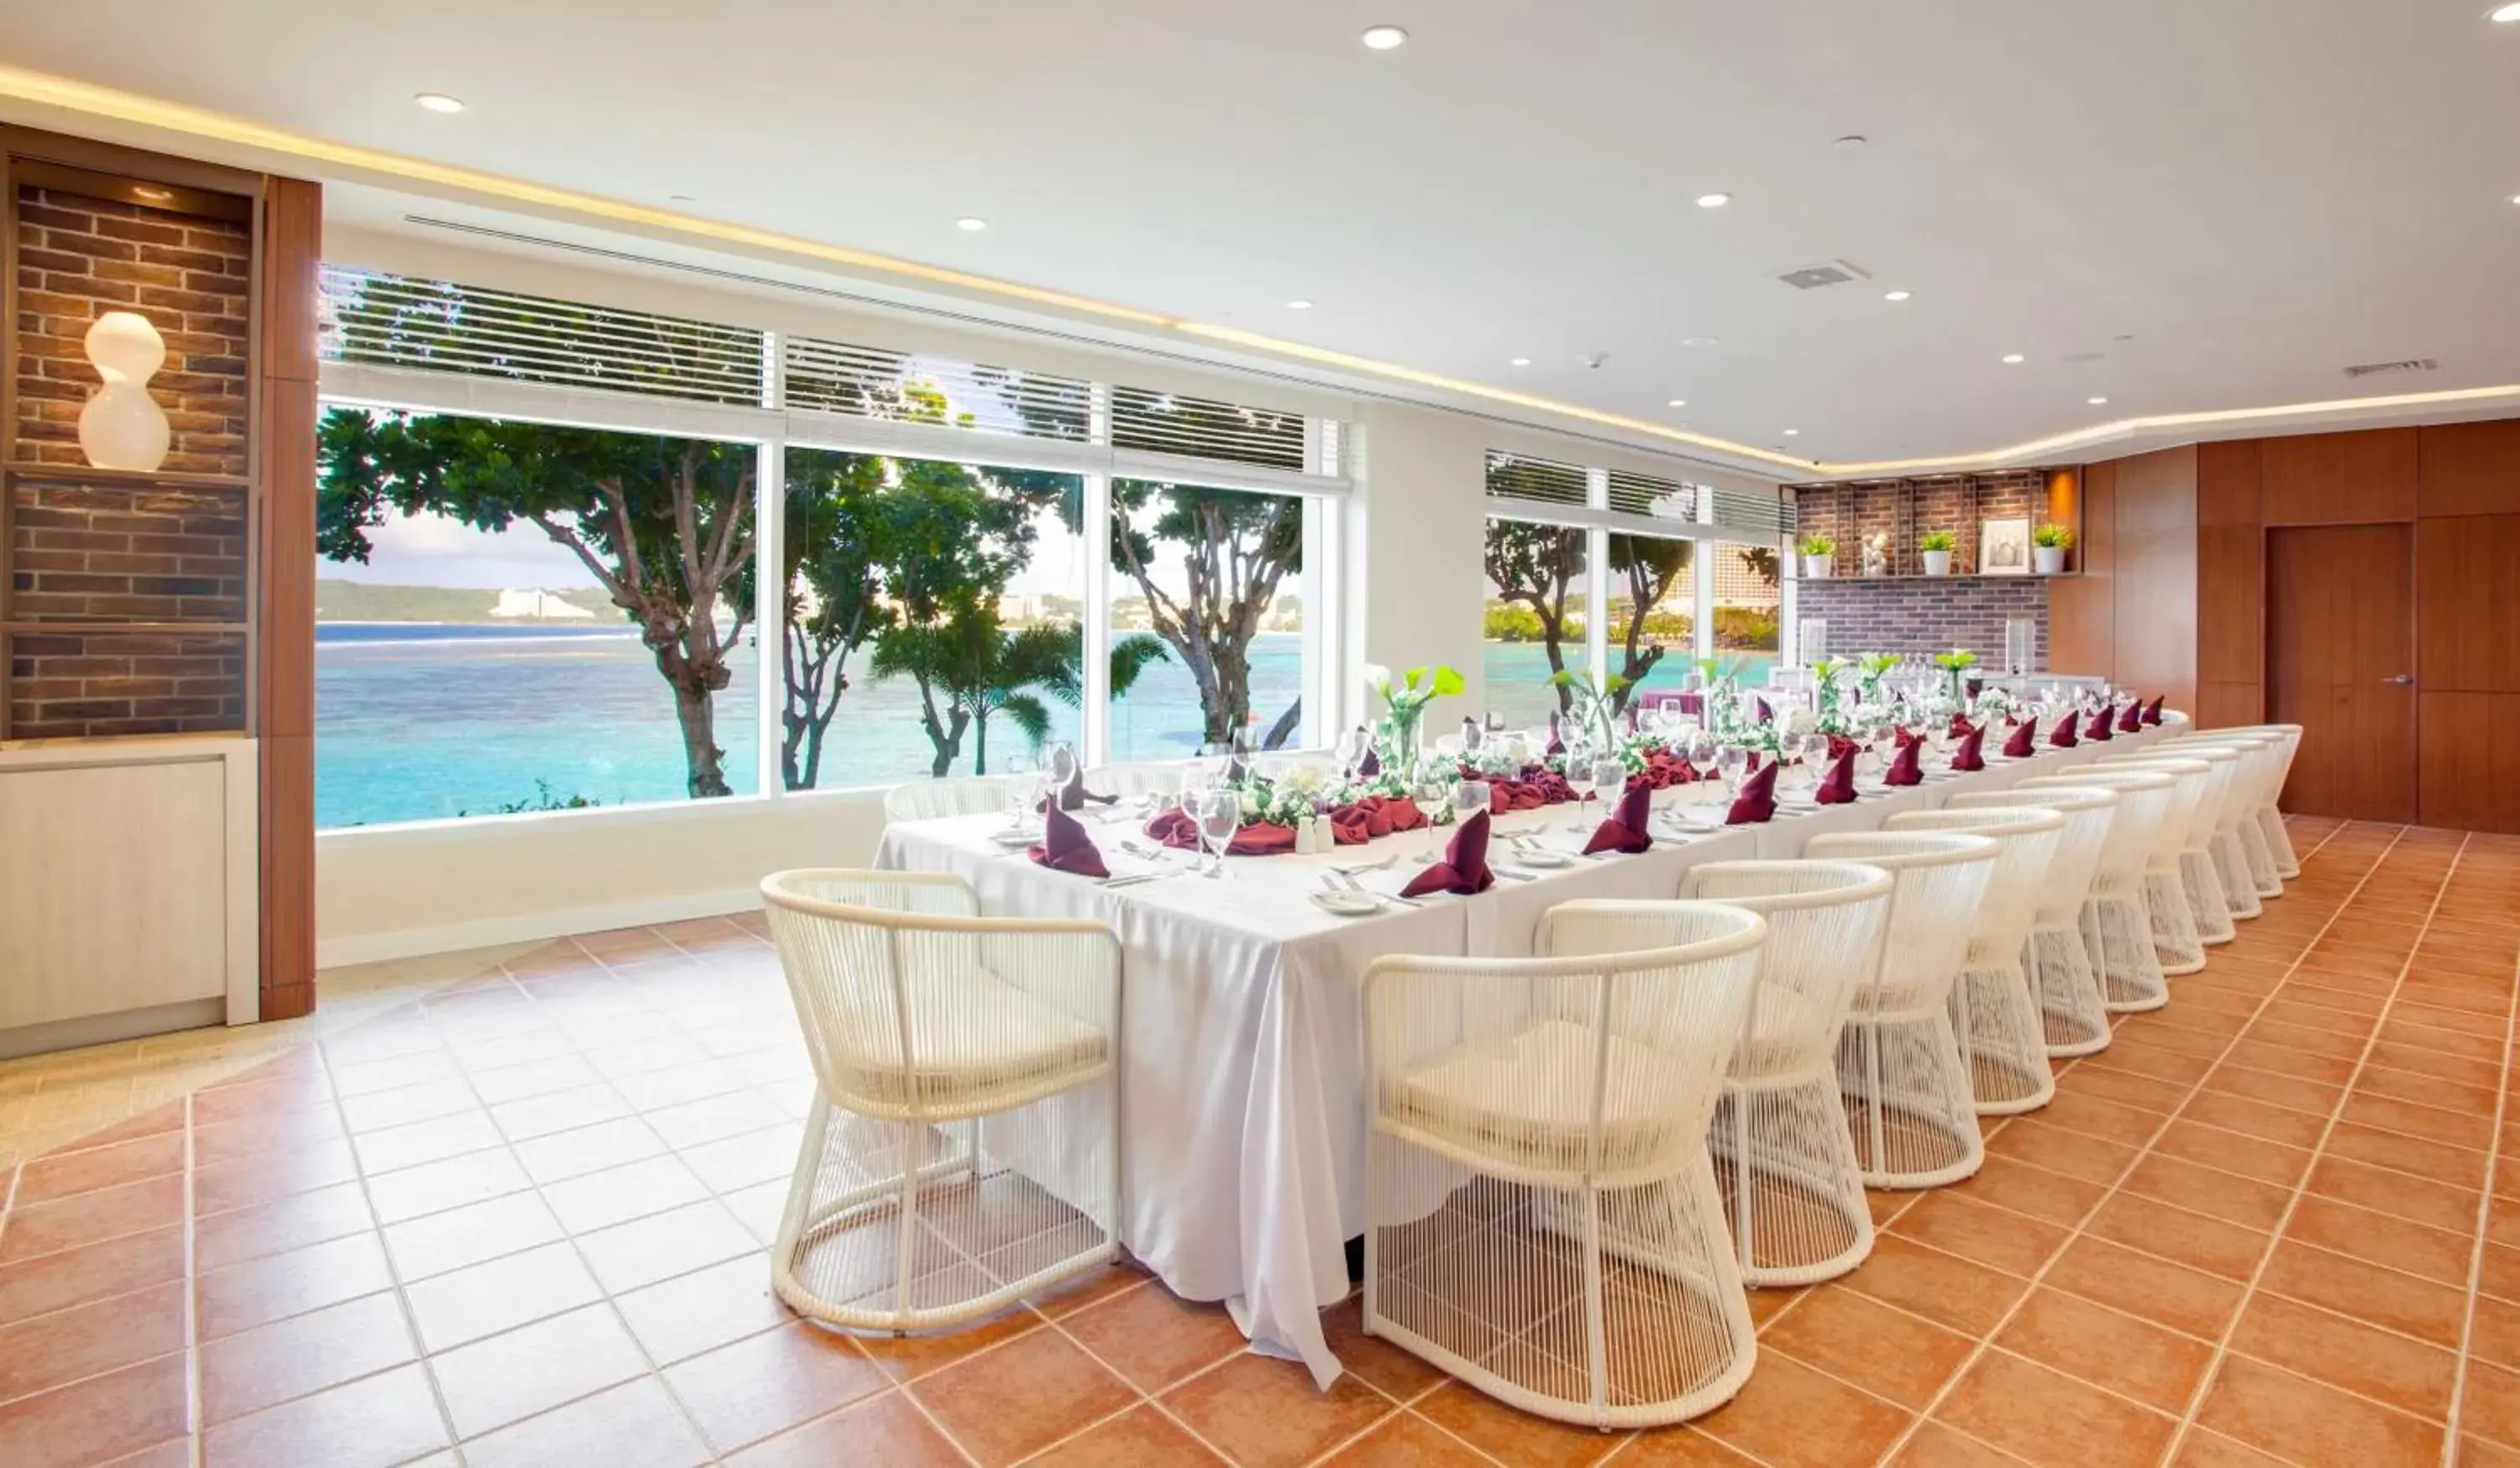 Meeting/conference room, Banquet Facilities in Hilton Guam Resort & Spa